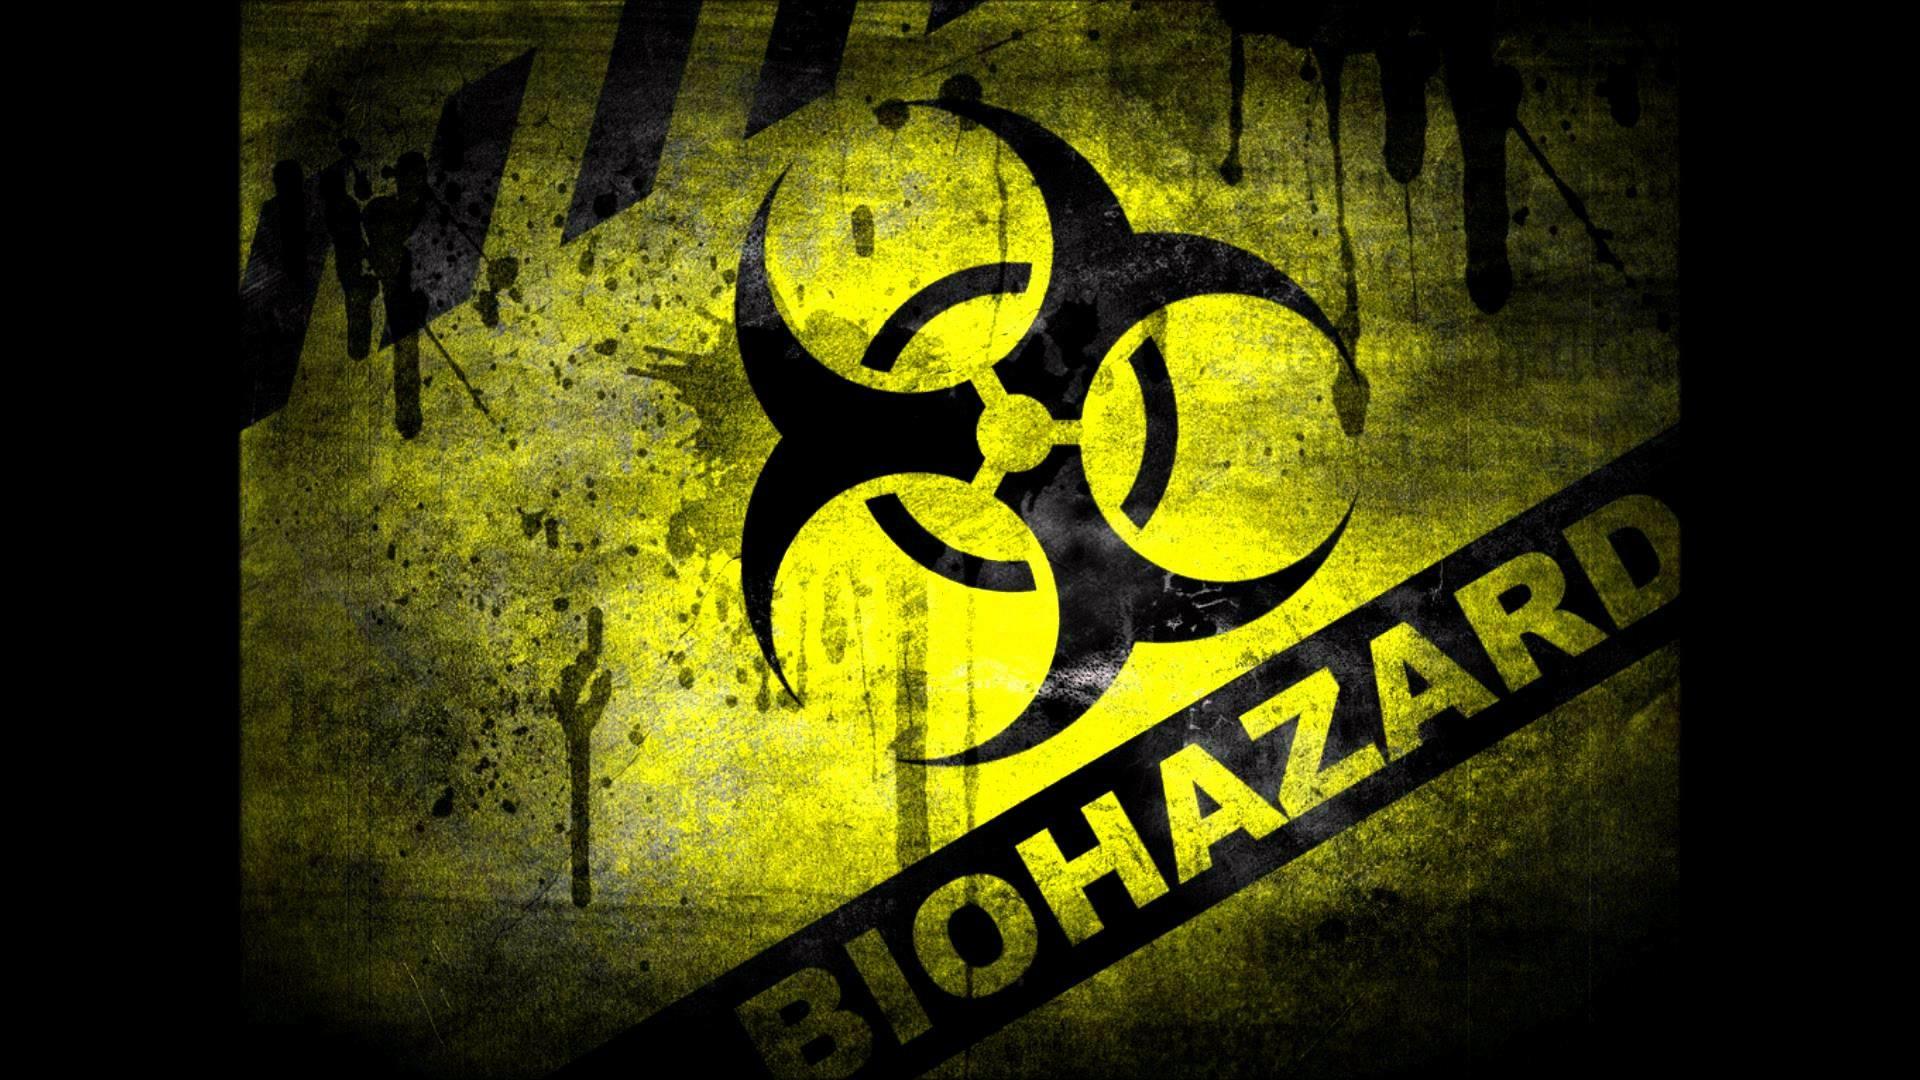 Biohazard Symbol Wallpaper